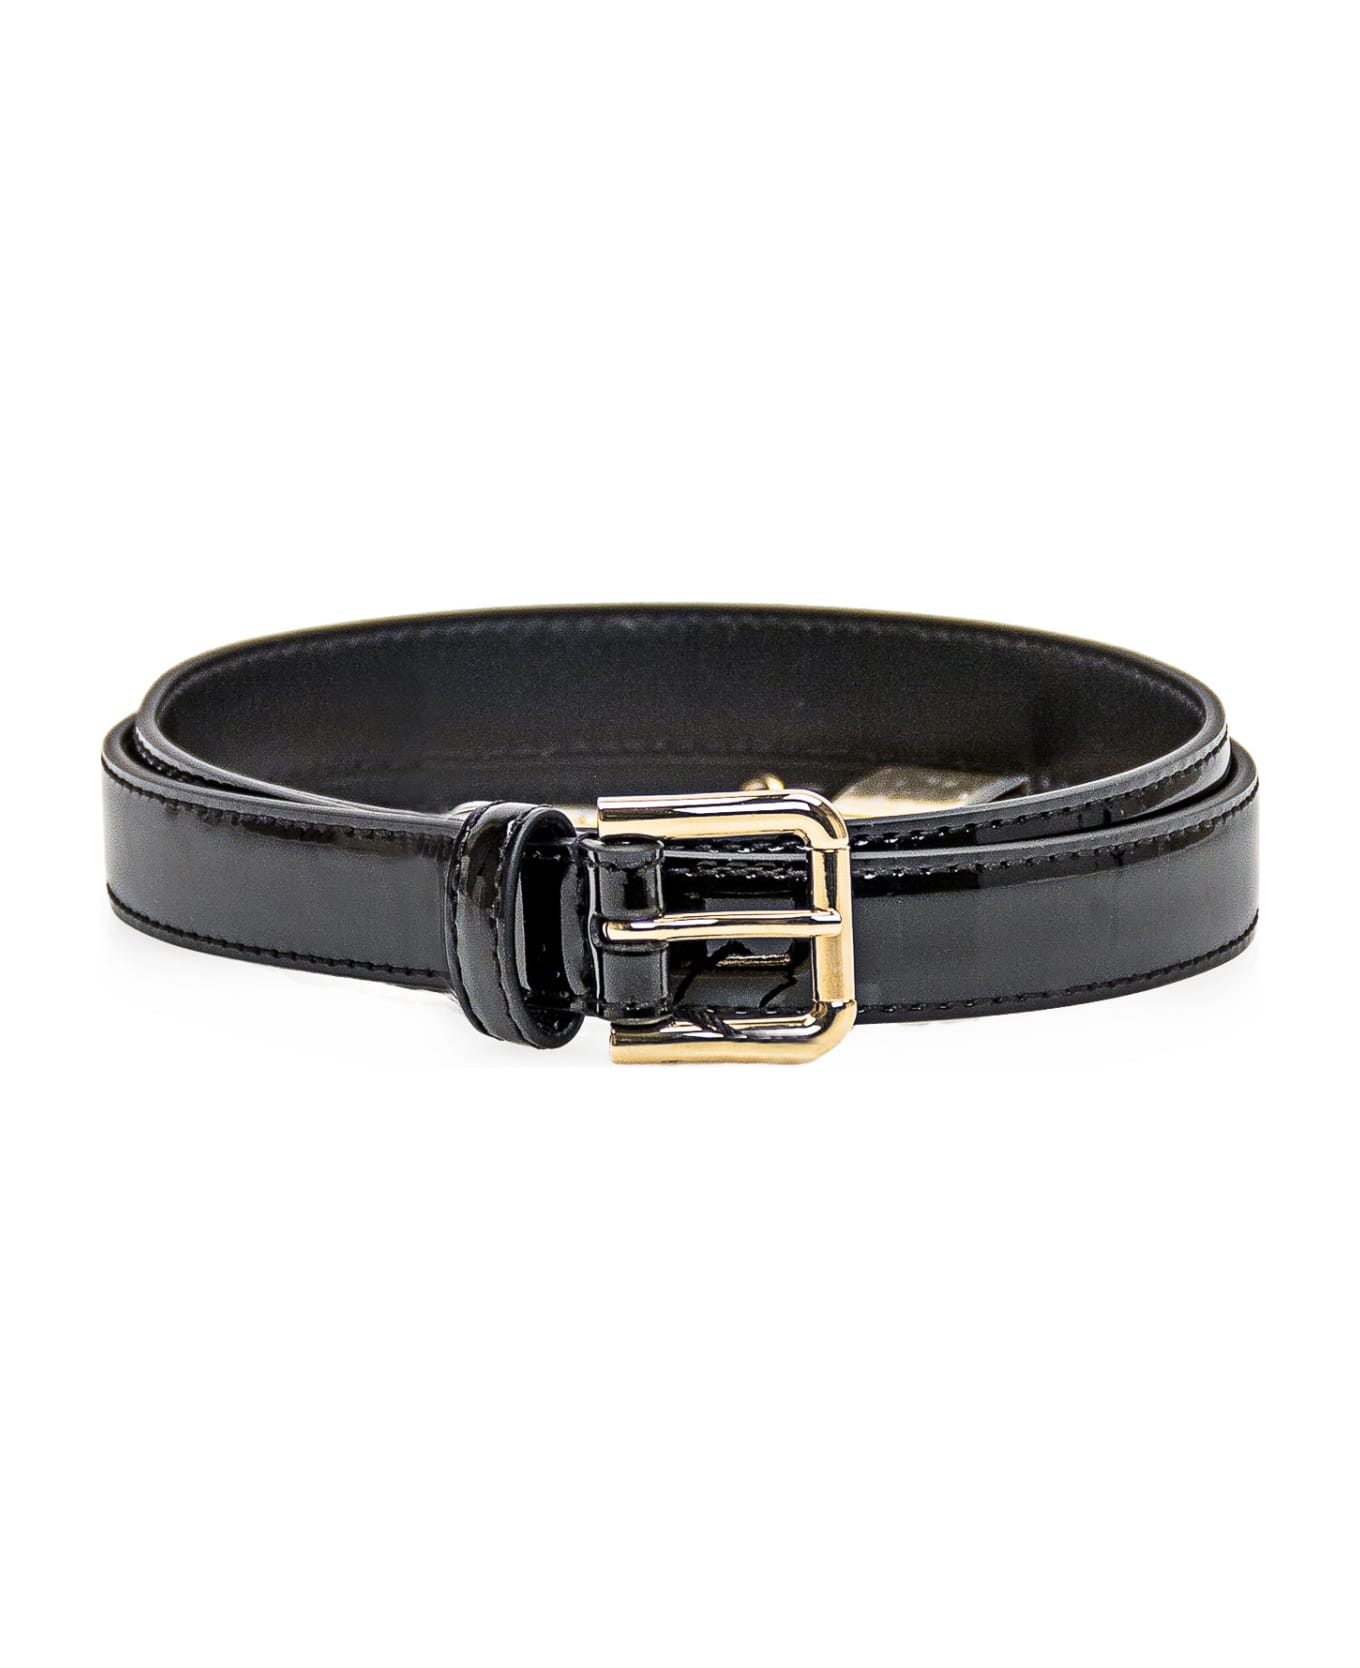 Dolce & Gabbana Black Leather Belt - NERO ベルト